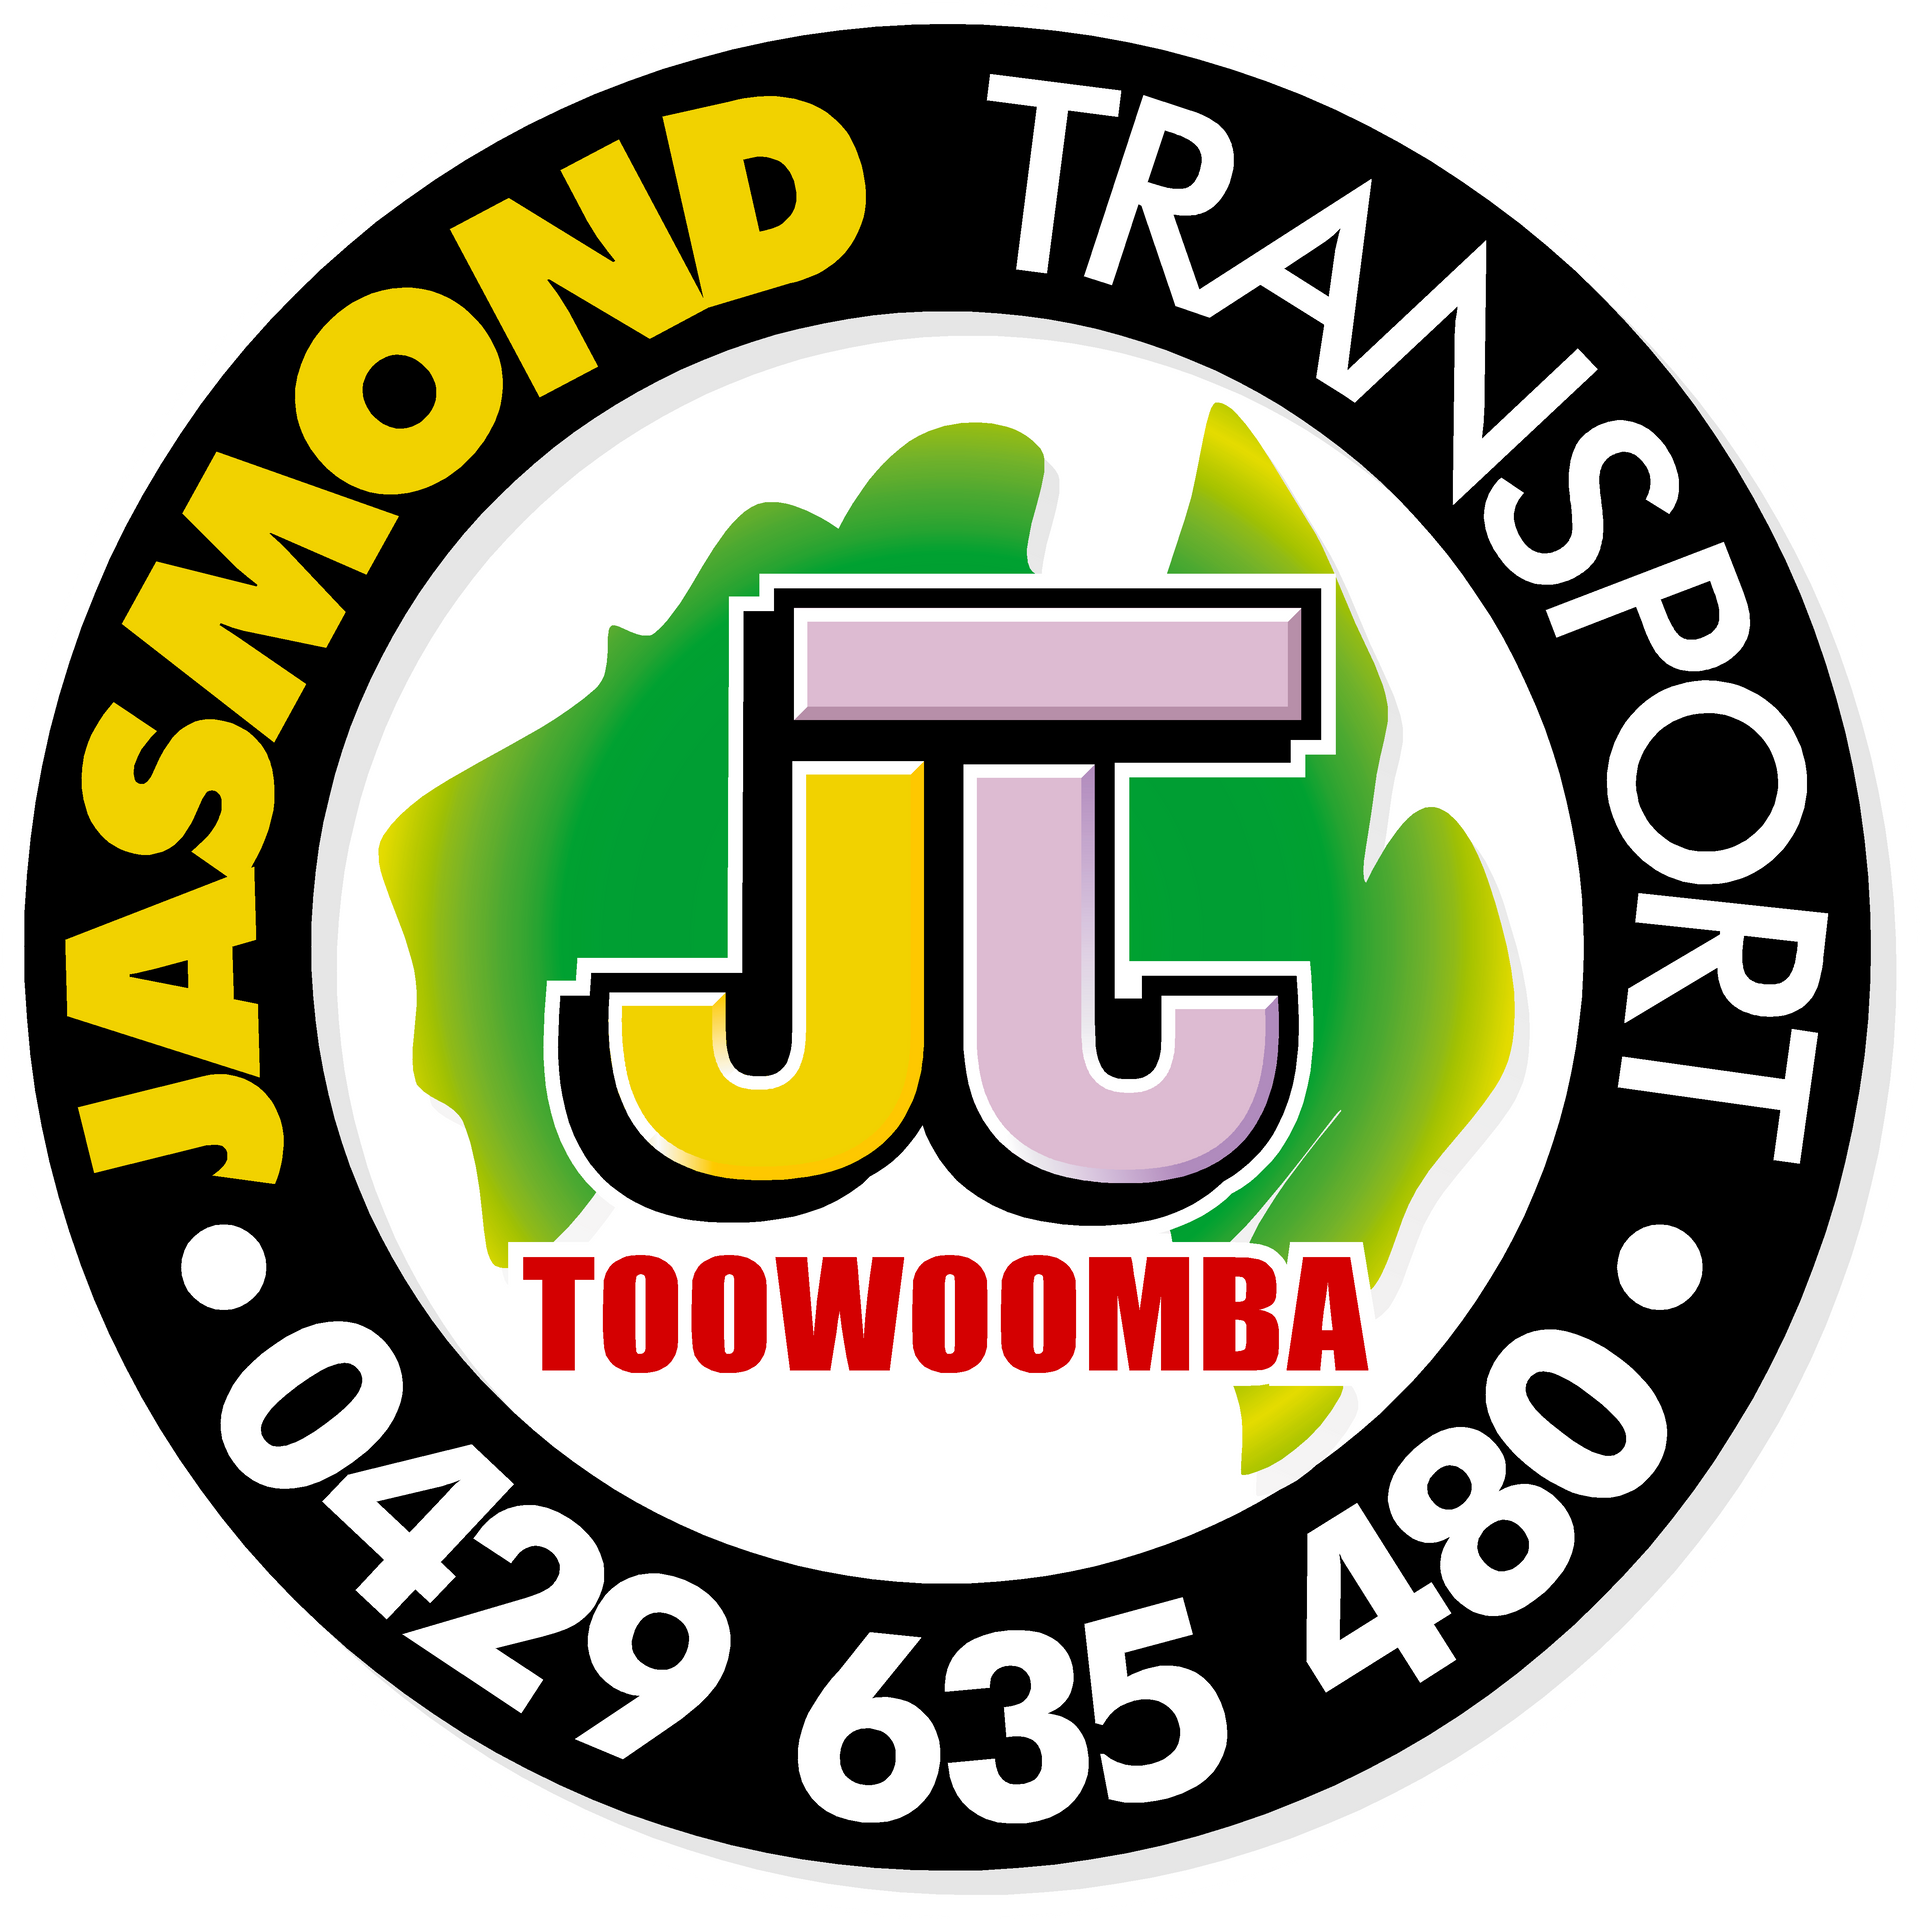 Jasmond Transport